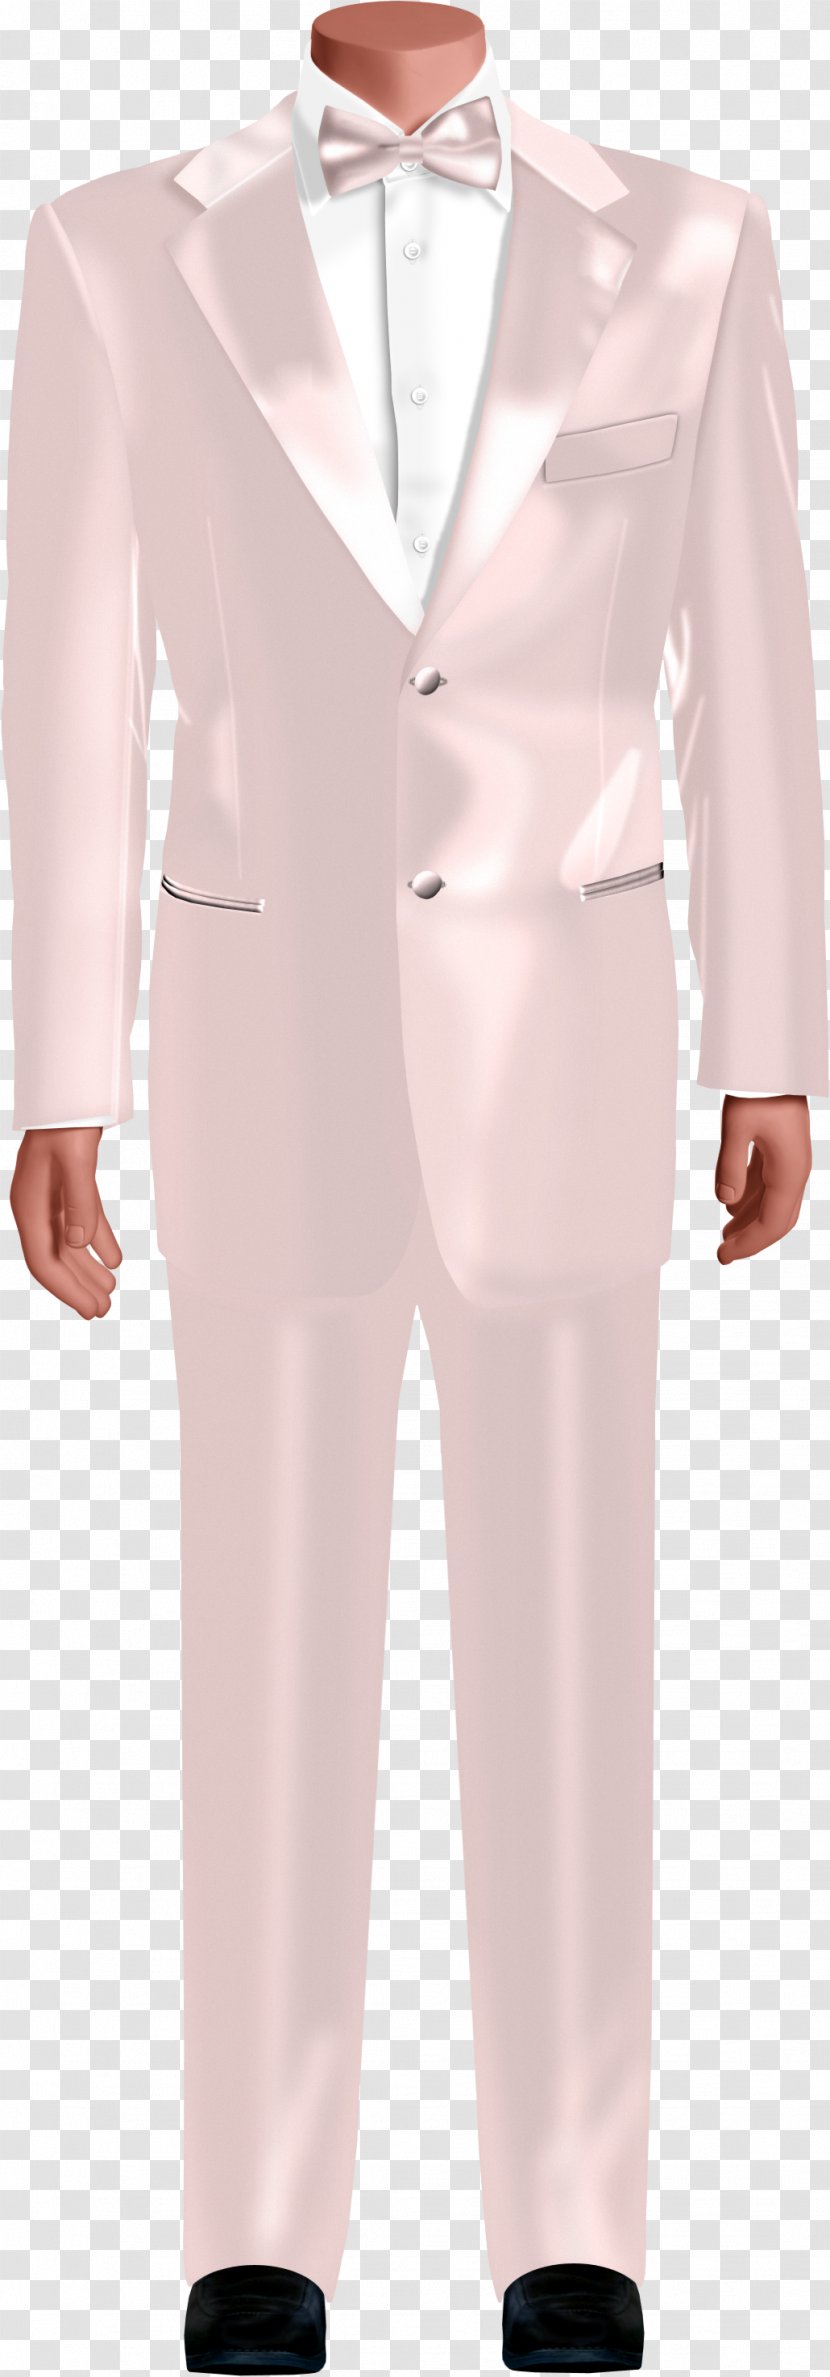 Tuxedo Suit Pajamas Formal Wear - Outerwear Transparent PNG